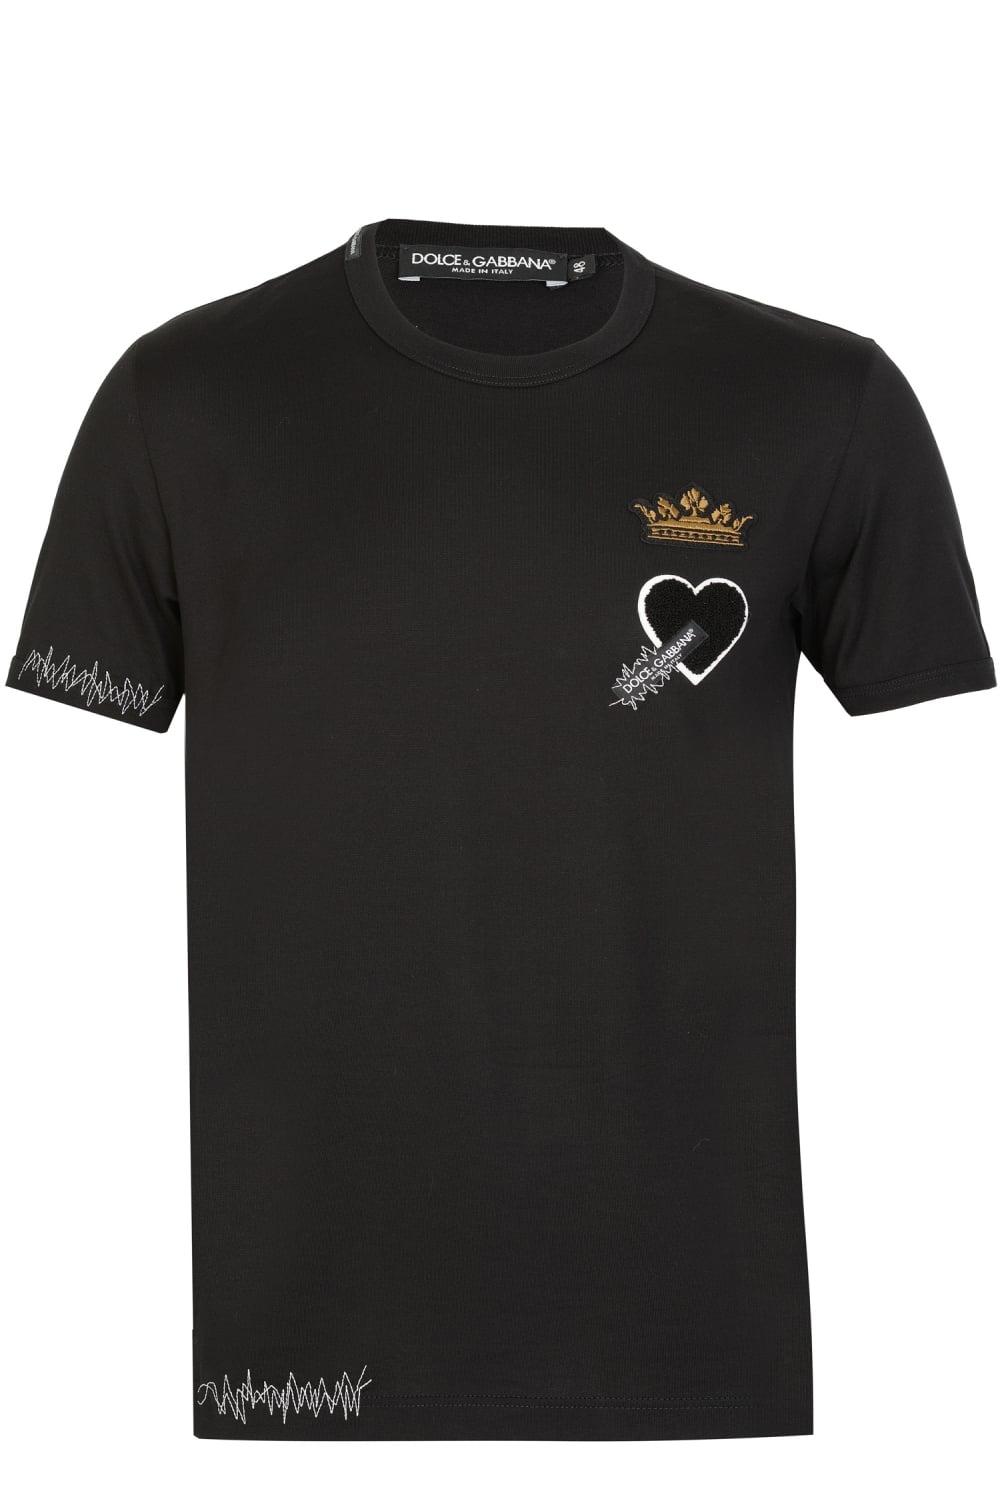 Flock Logo - Dolce & Gabbana Flock Logo Tshirt Black